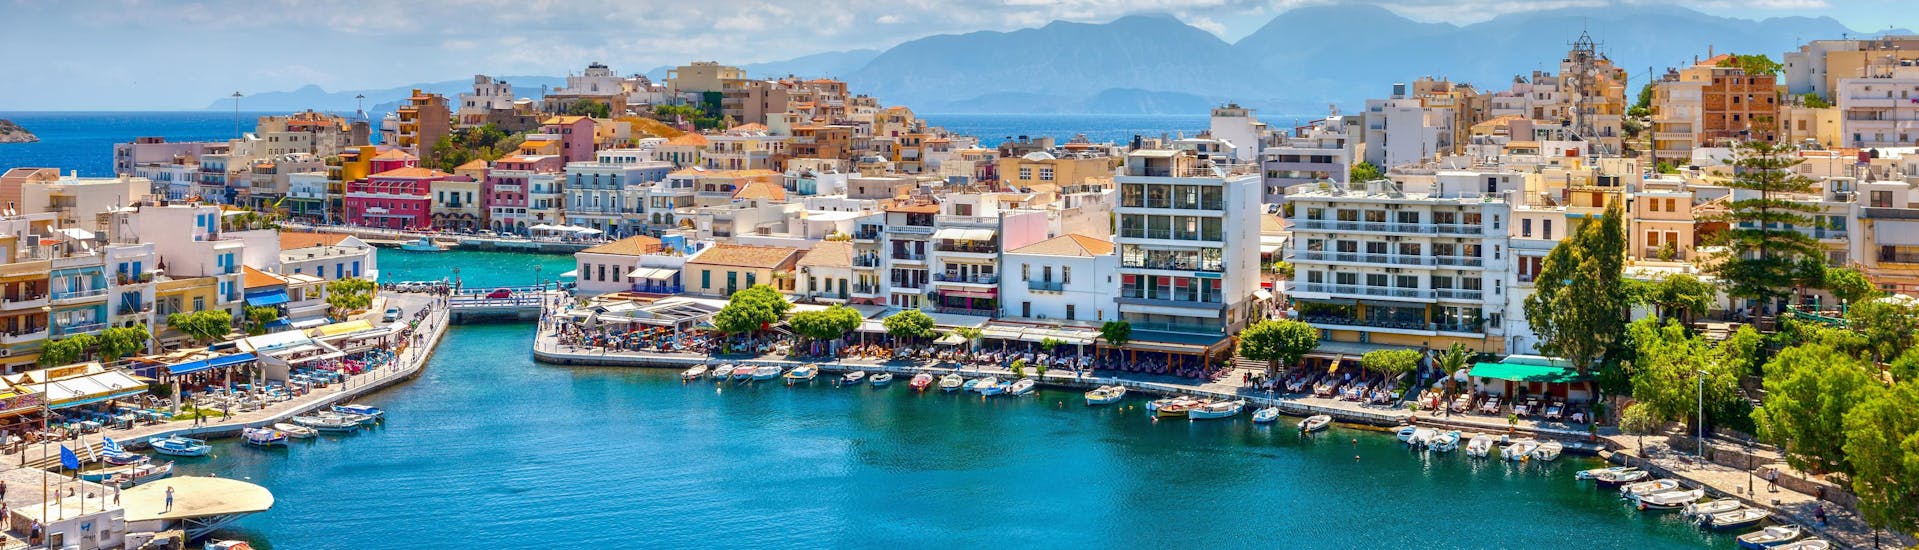 An image of the beautiful Cretan coastline one can see on a boat trip from Agios Nikolaos.